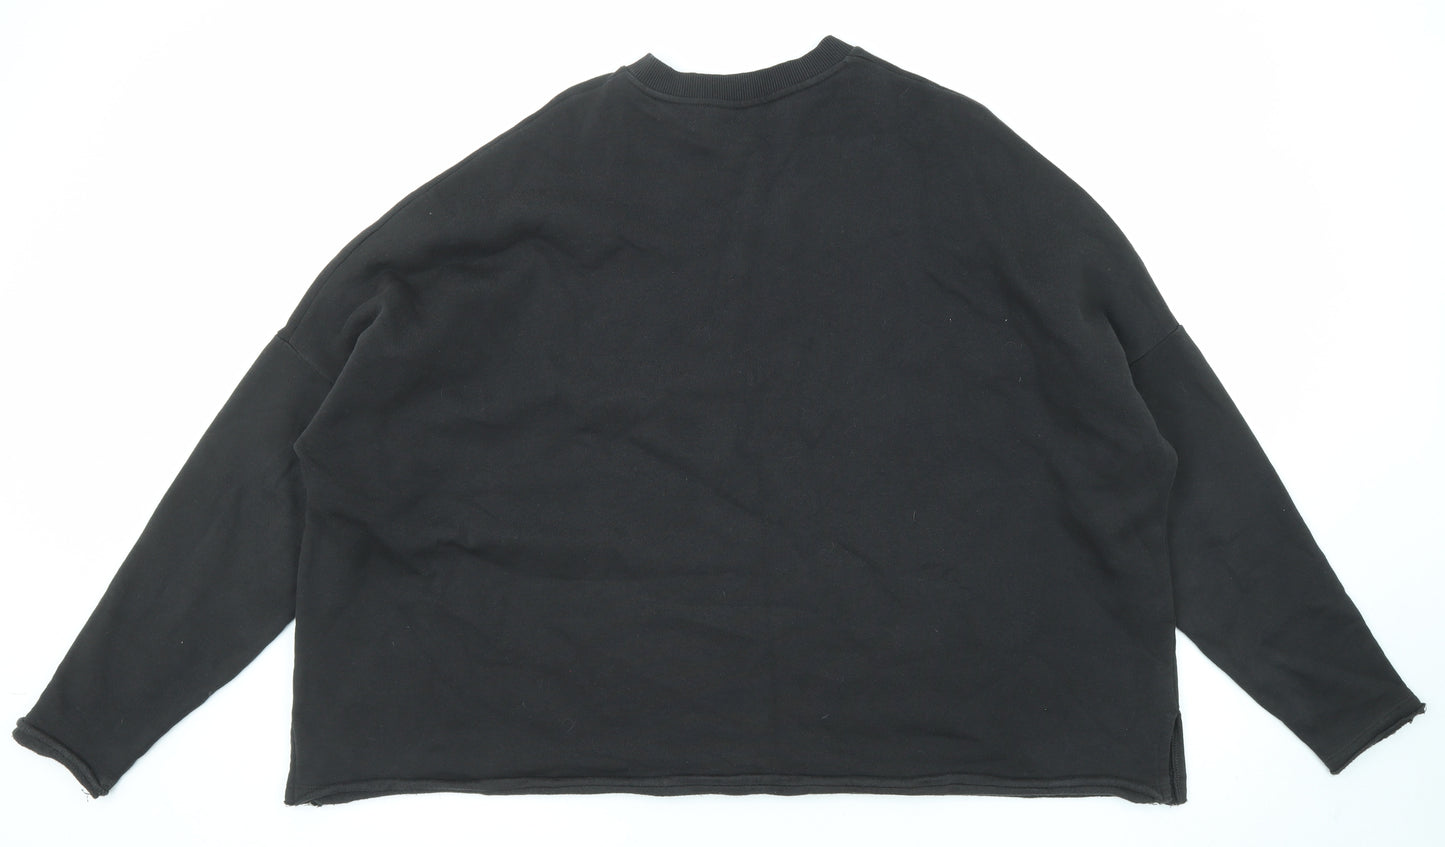 ASOS Womens Black Cotton Pullover Sweatshirt Size S Pullover